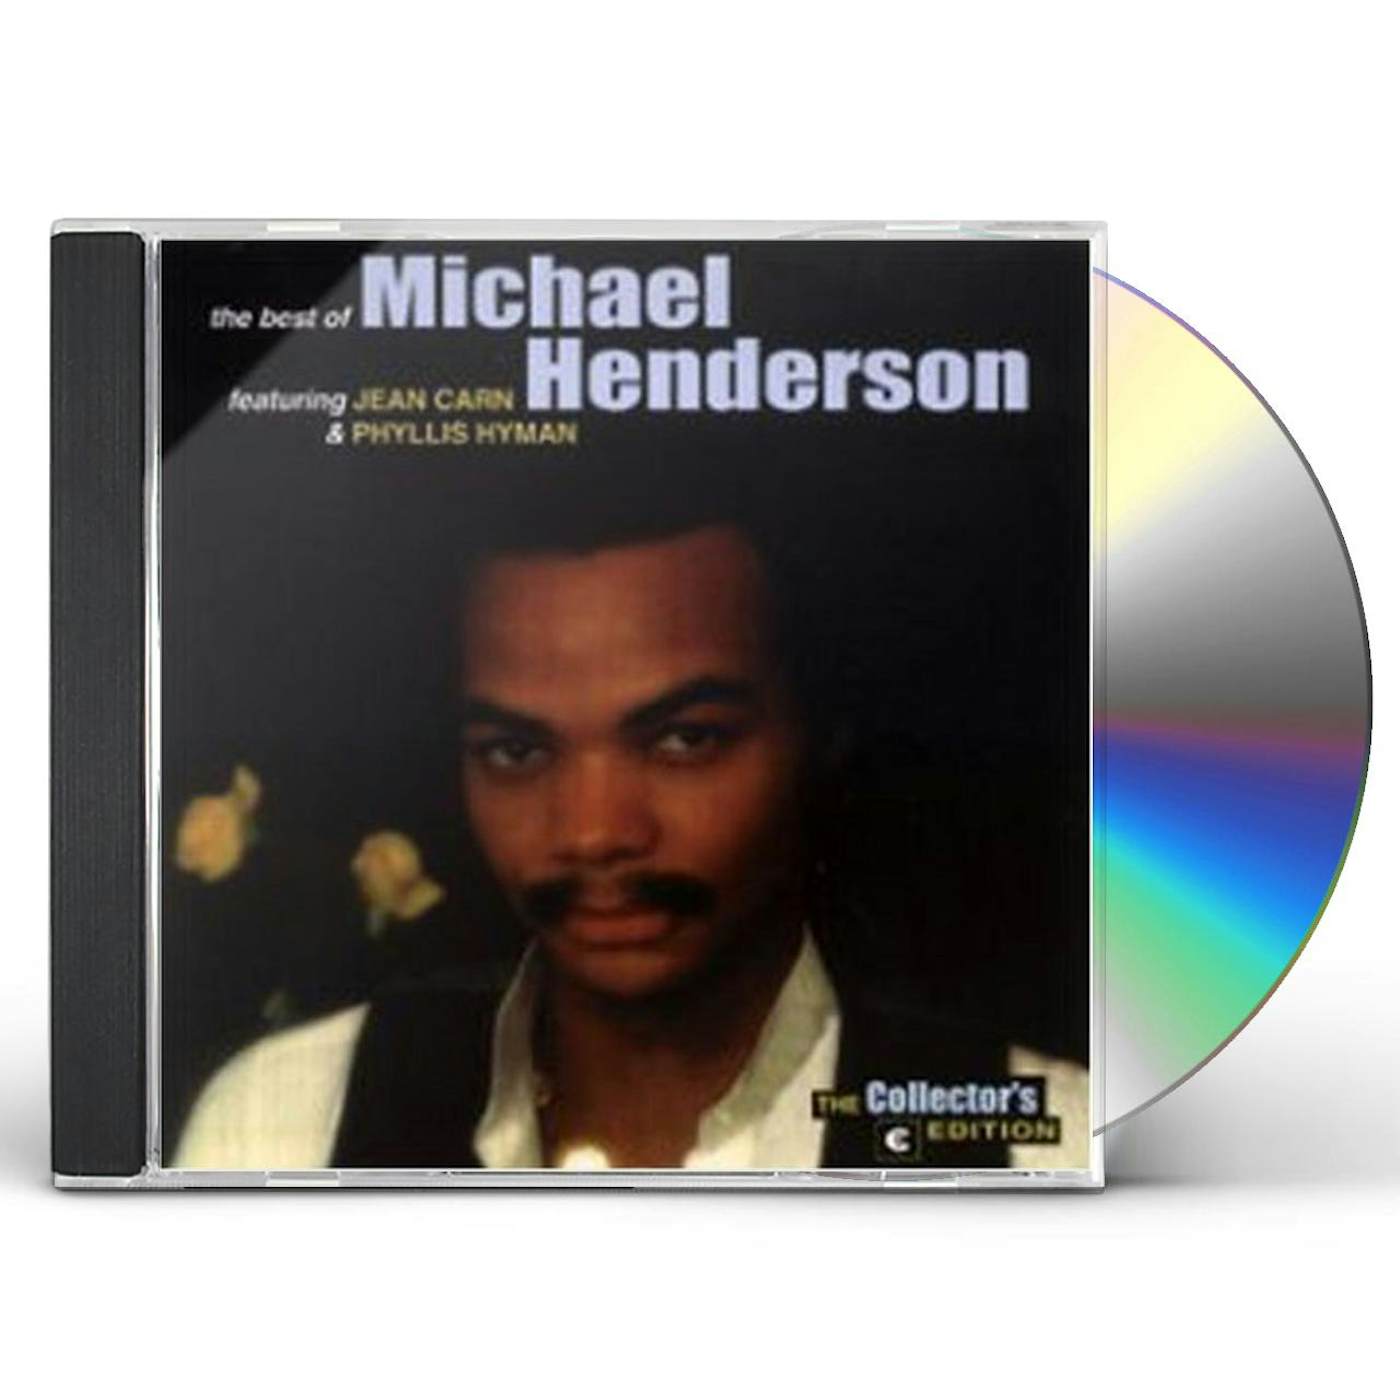 Michael Henderson BEST OF CD